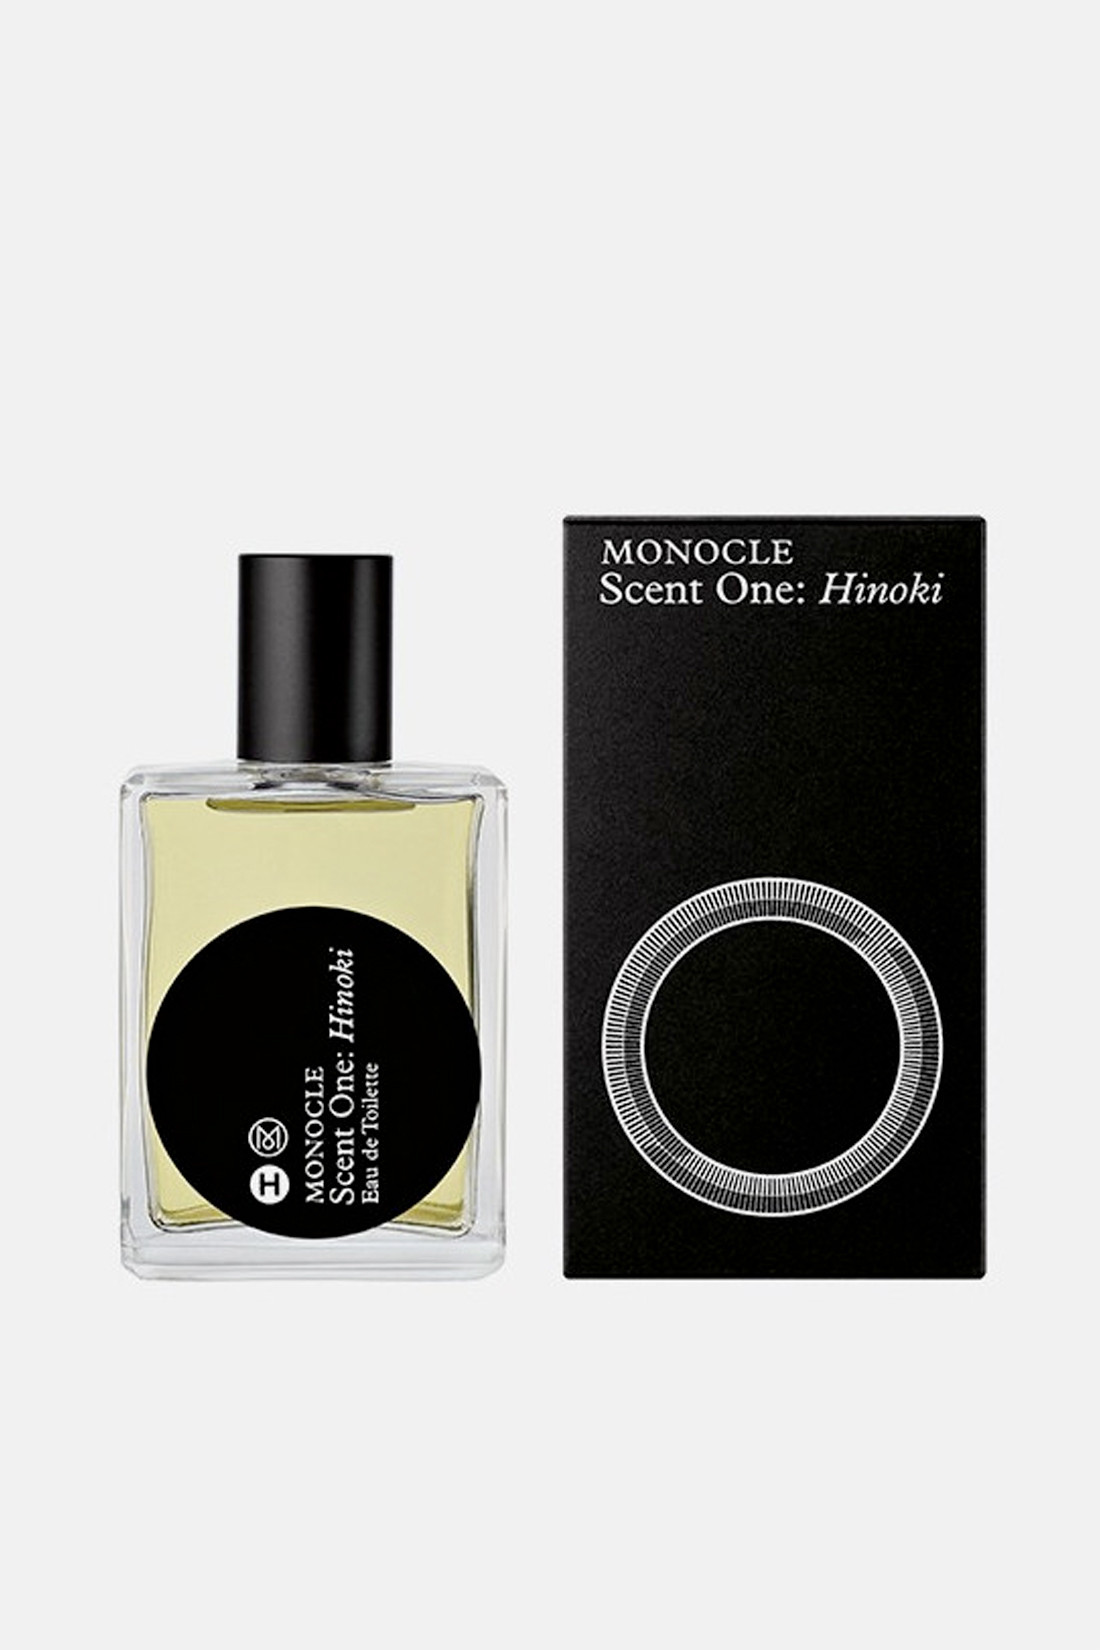 Cdg x monocle scent one hinoki